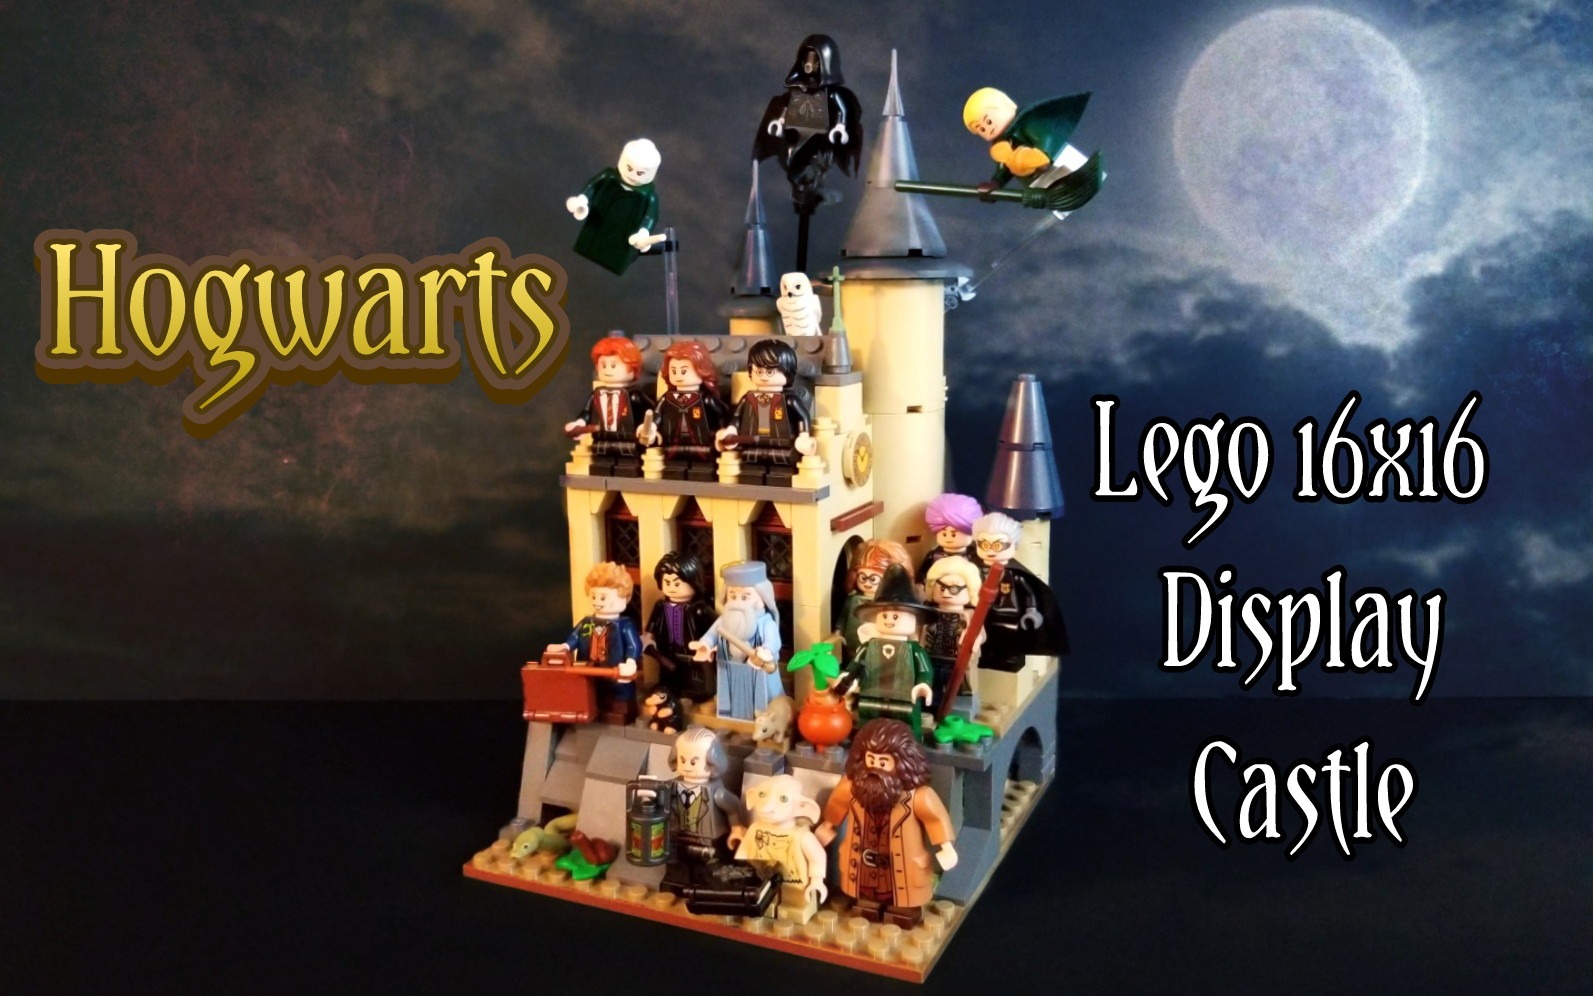 Lego Hogwarts 16×16 Minifigure Display Castle